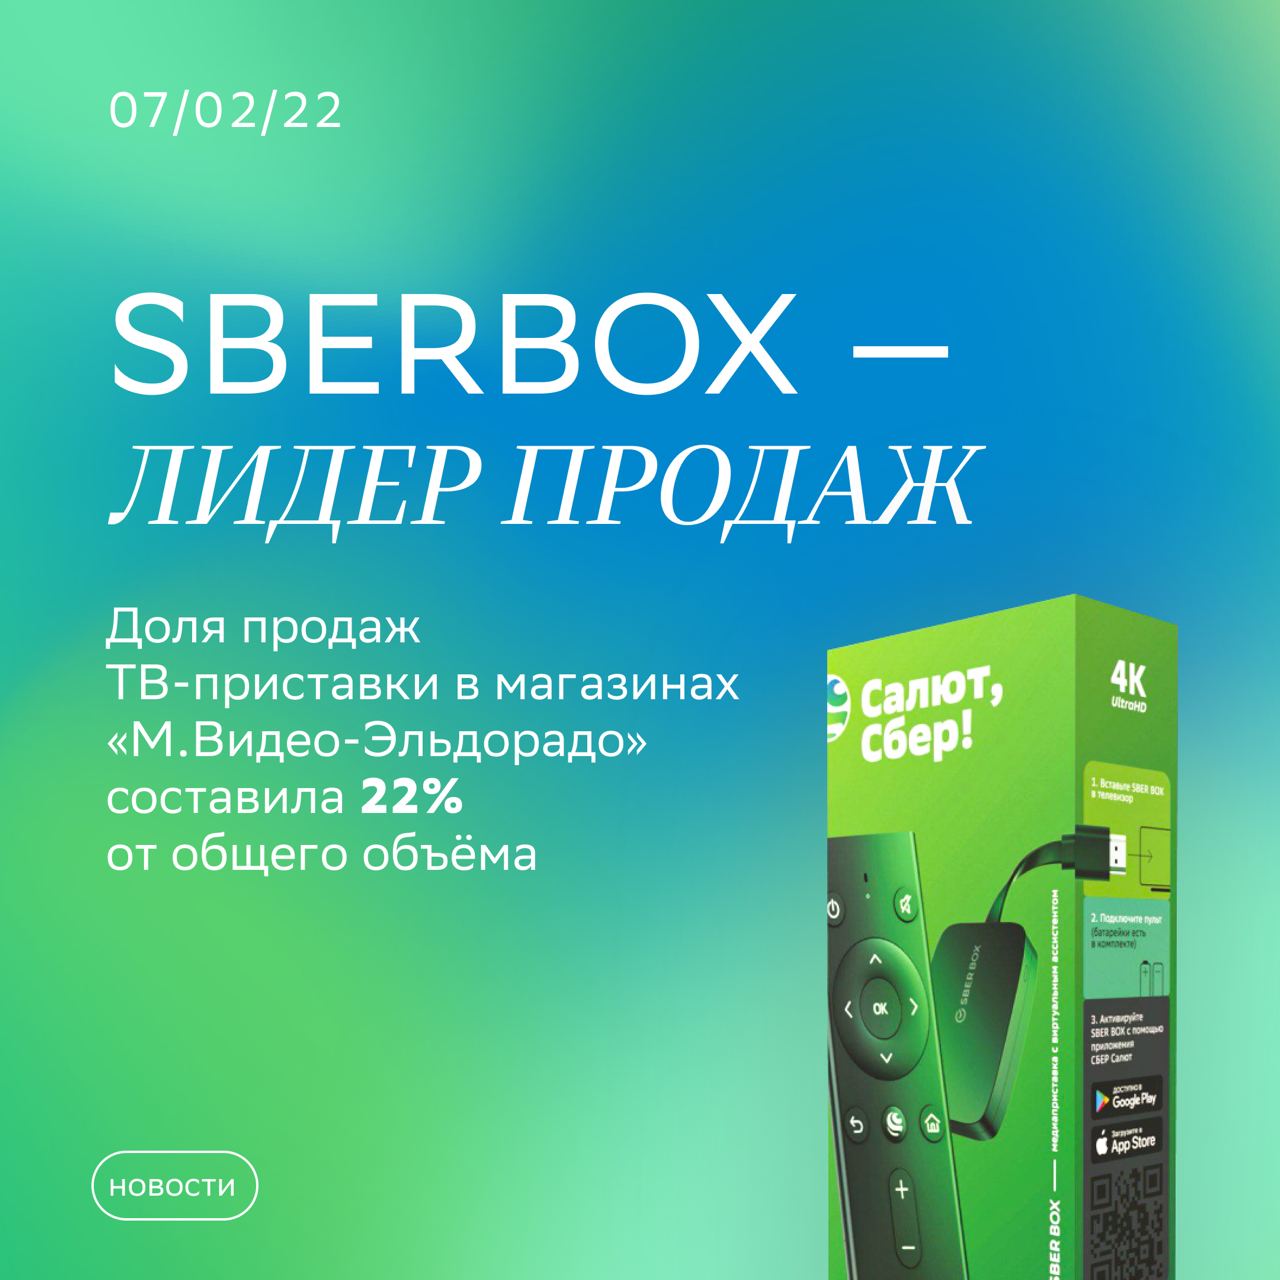 Sberbox ru